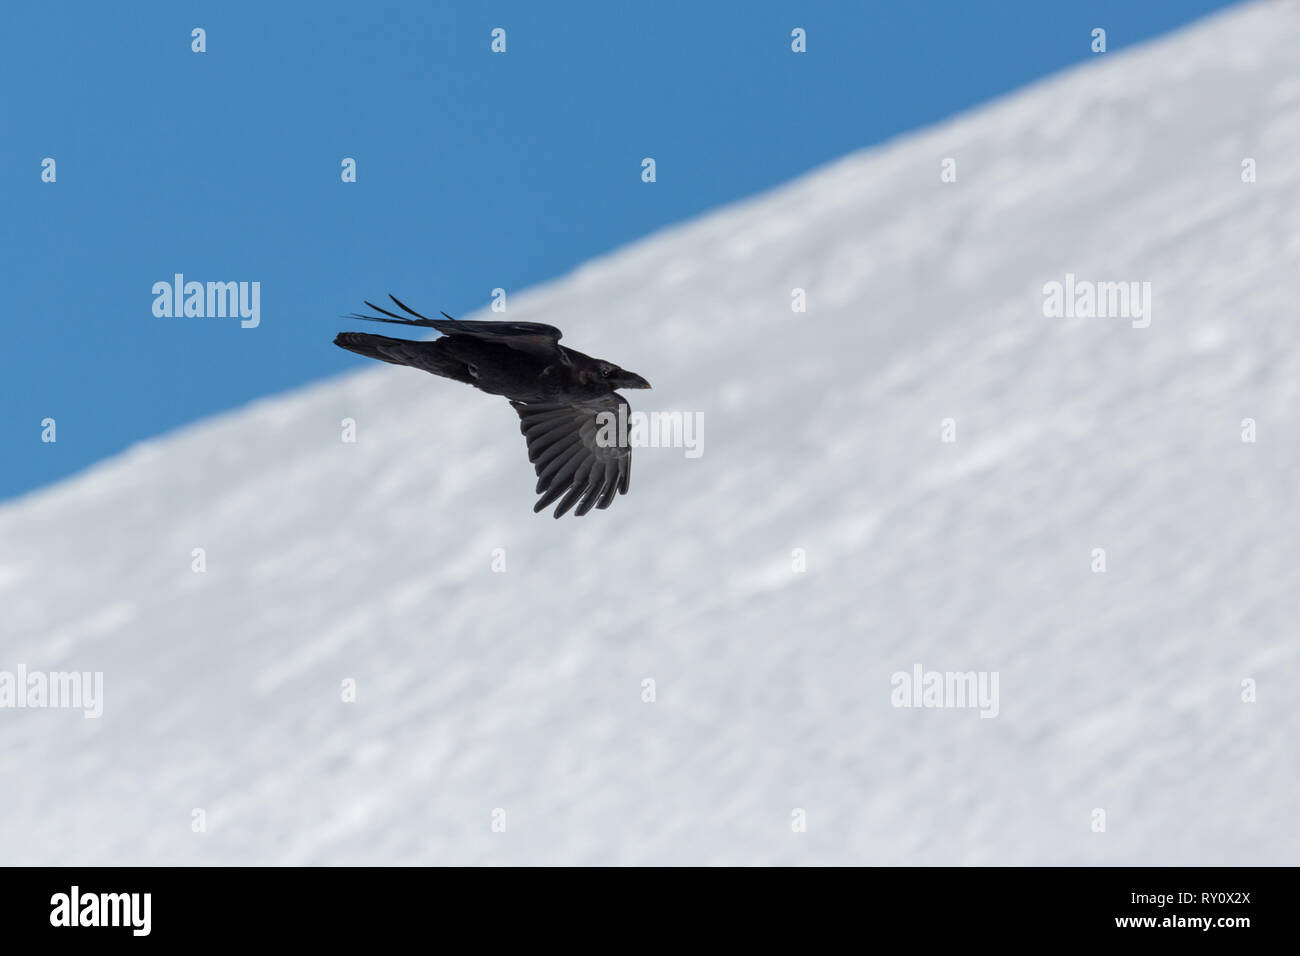 natural northern raven (corvus corax) in flight, blue sky, snow Stock Photo